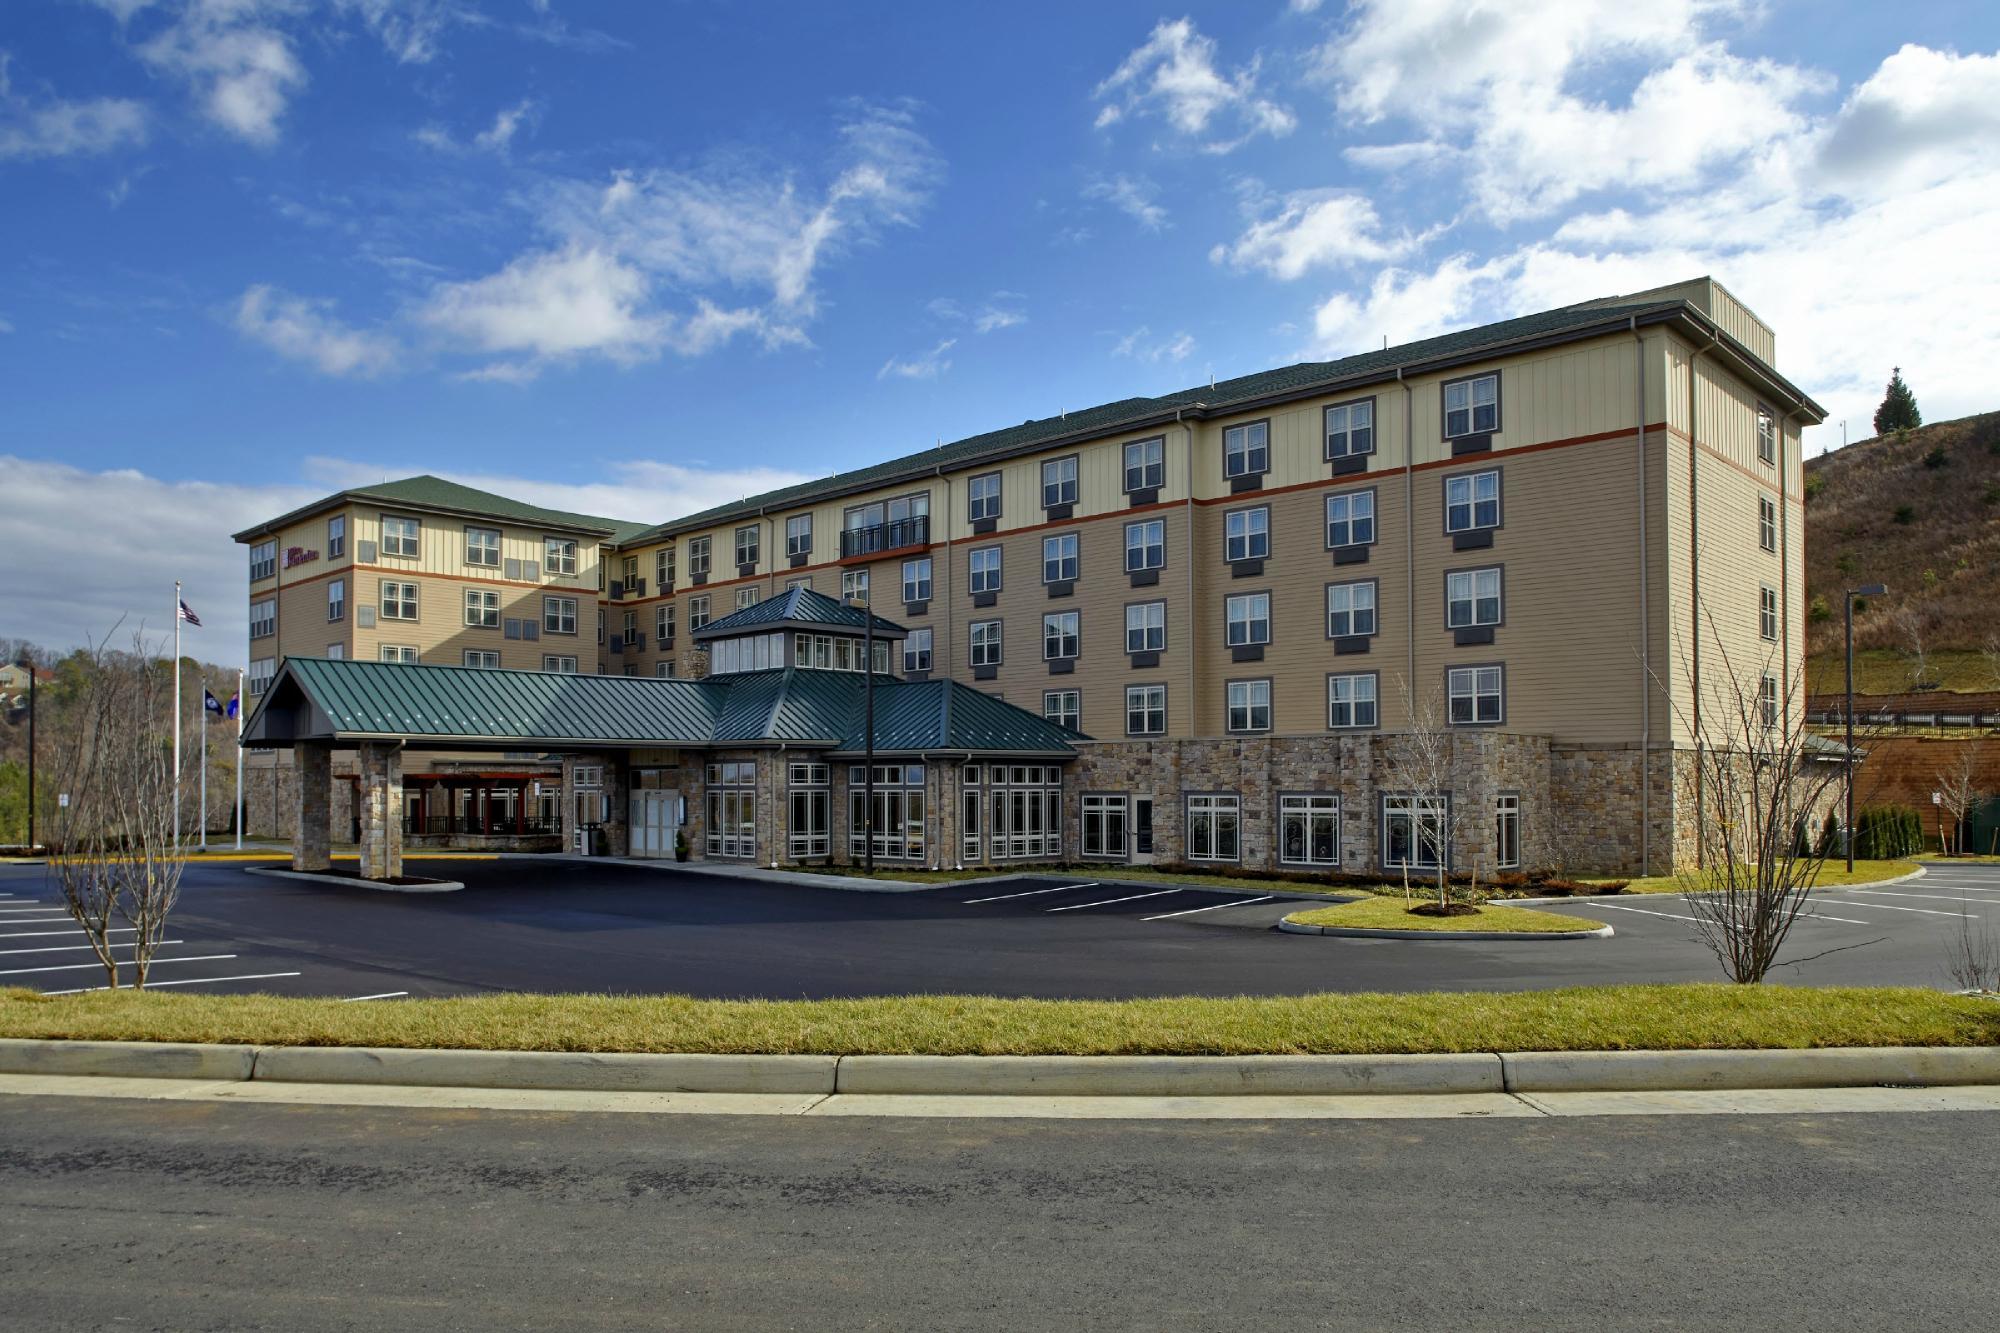 Photo of Hilton Garden Inn Roanoke, Roanoke, VA